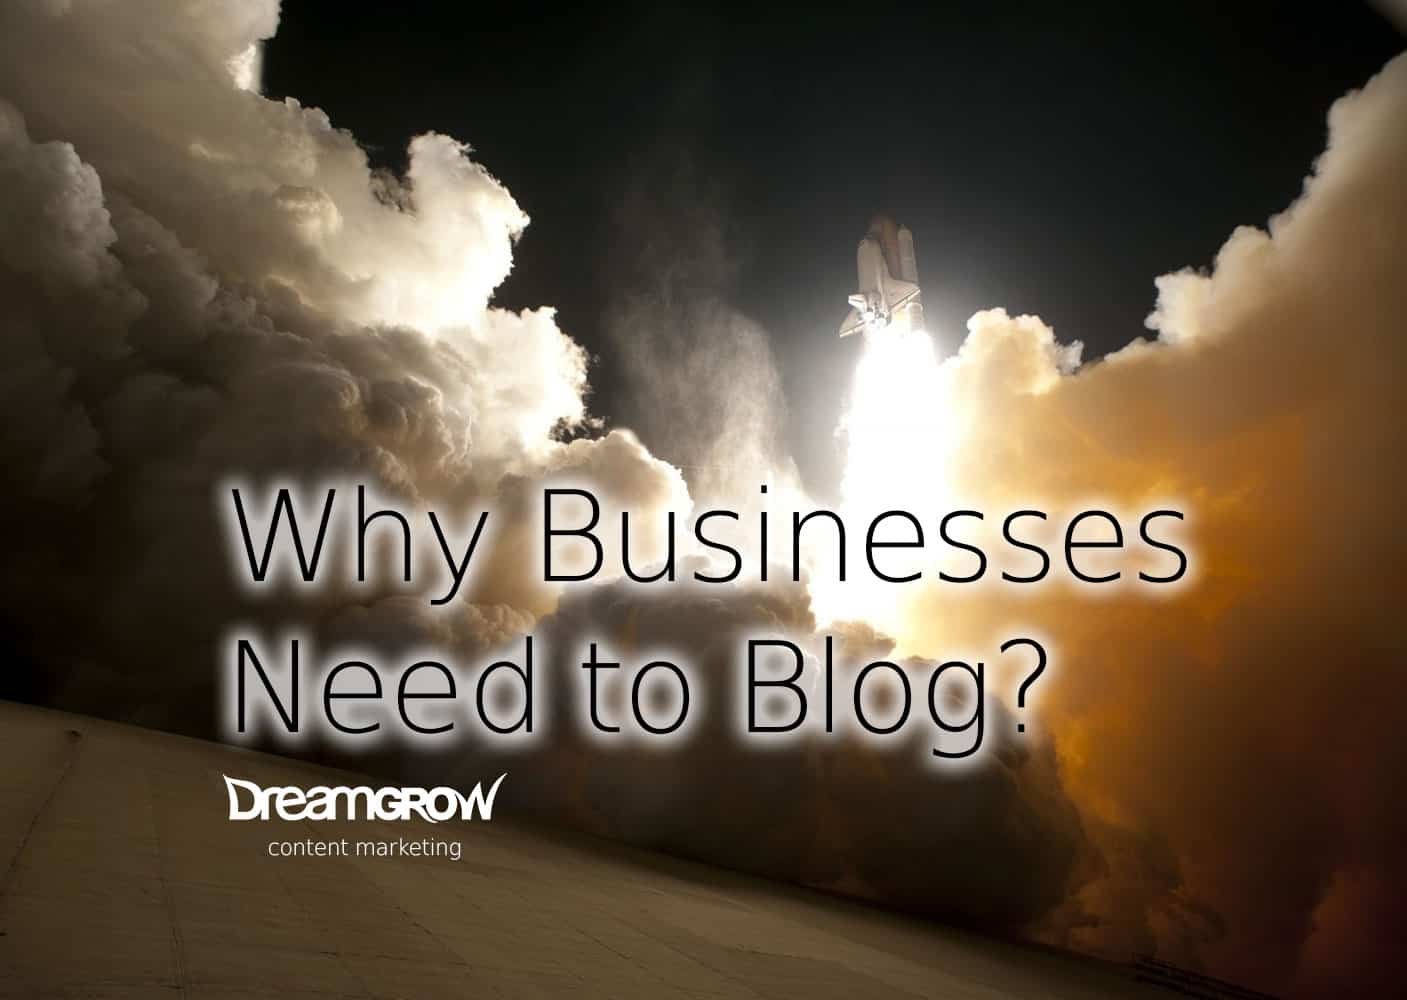 reasons to blog